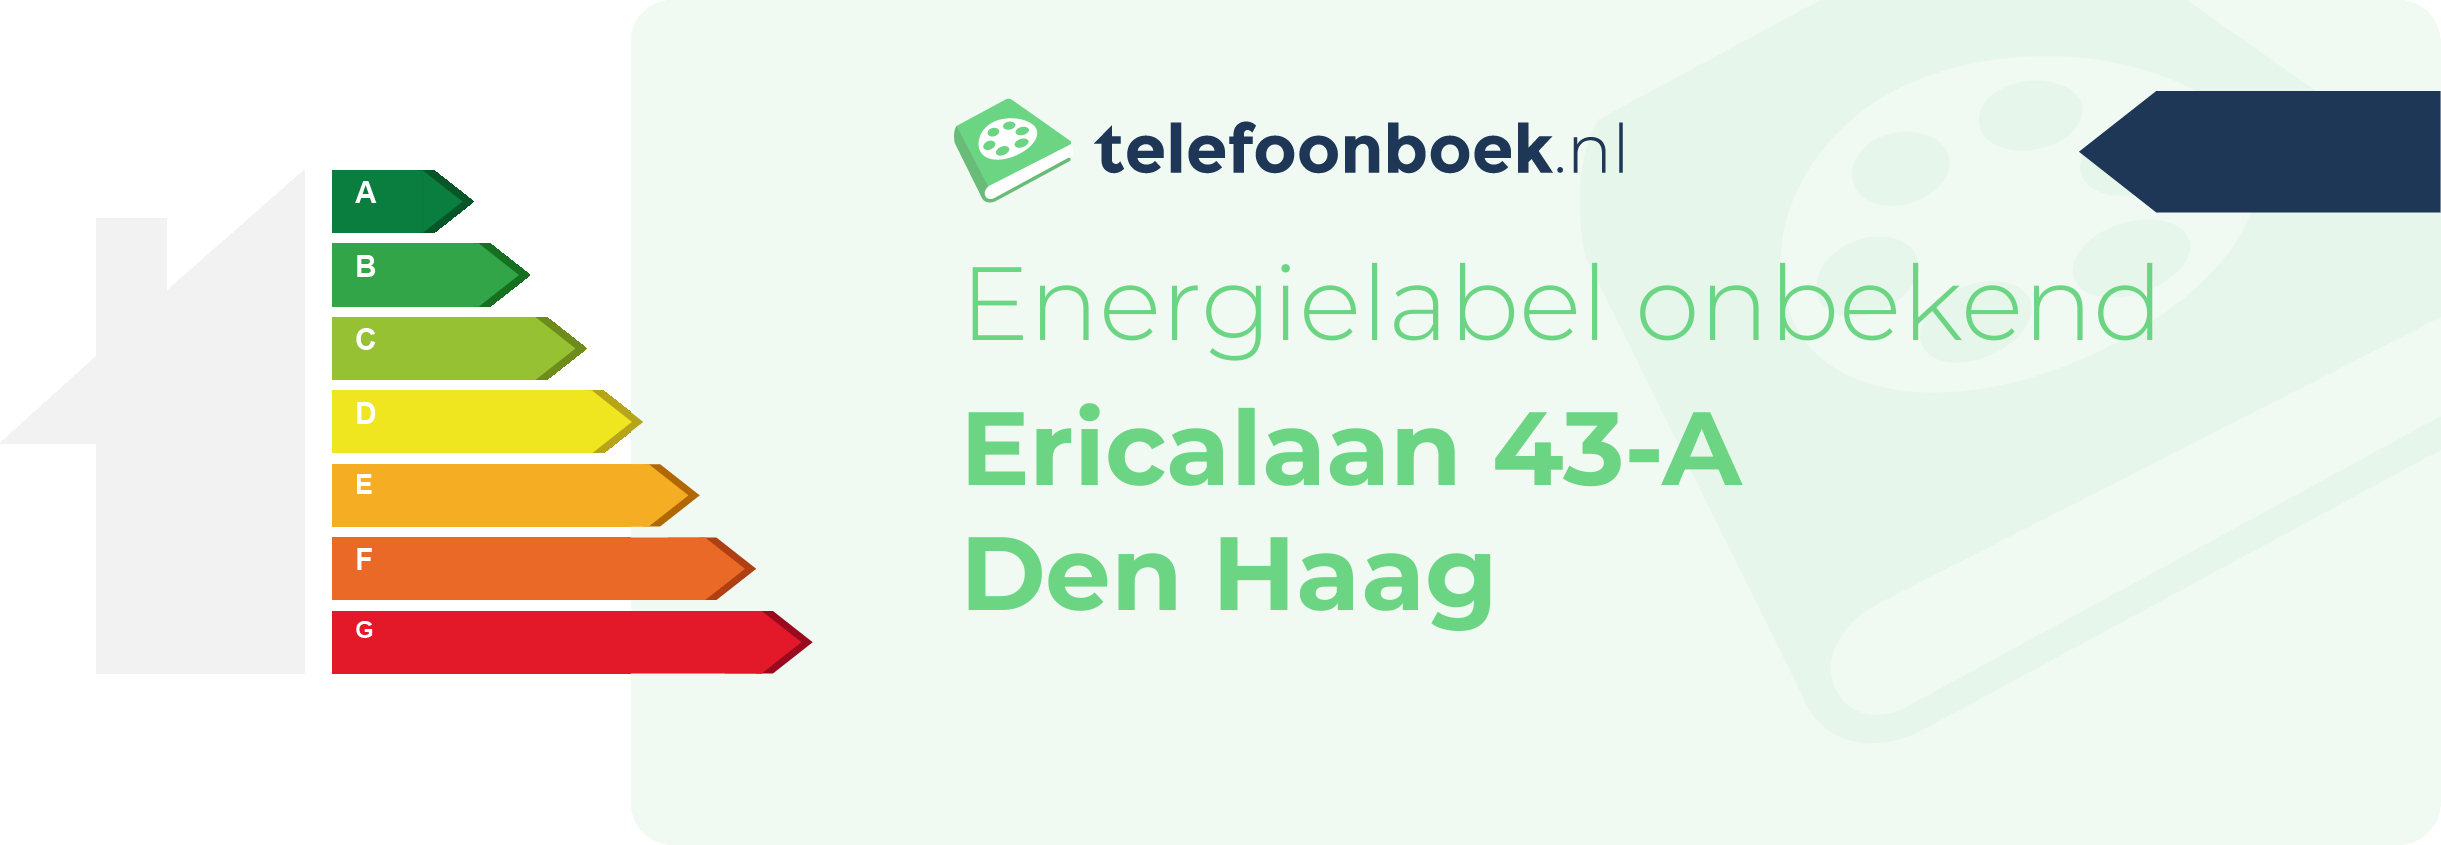 Energielabel Ericalaan 43-A Den Haag